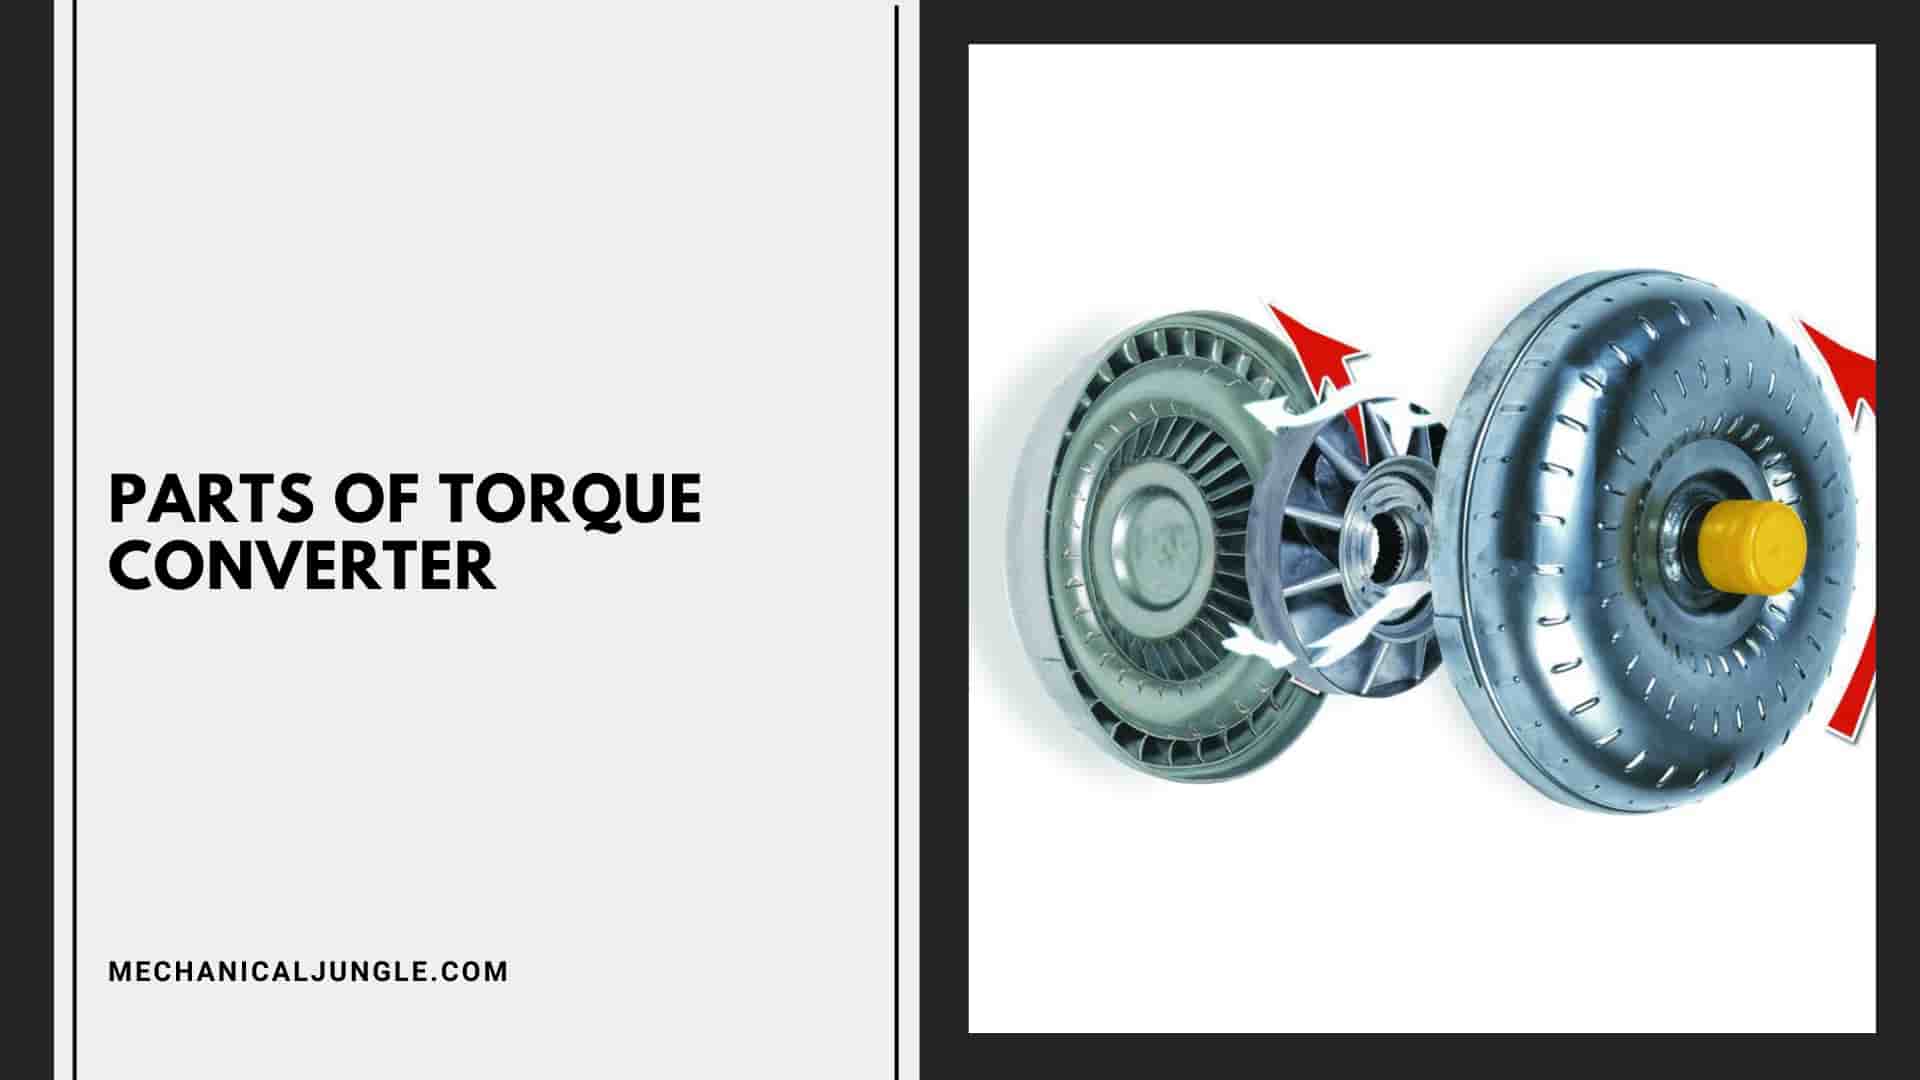 Parts of Torque Converter: